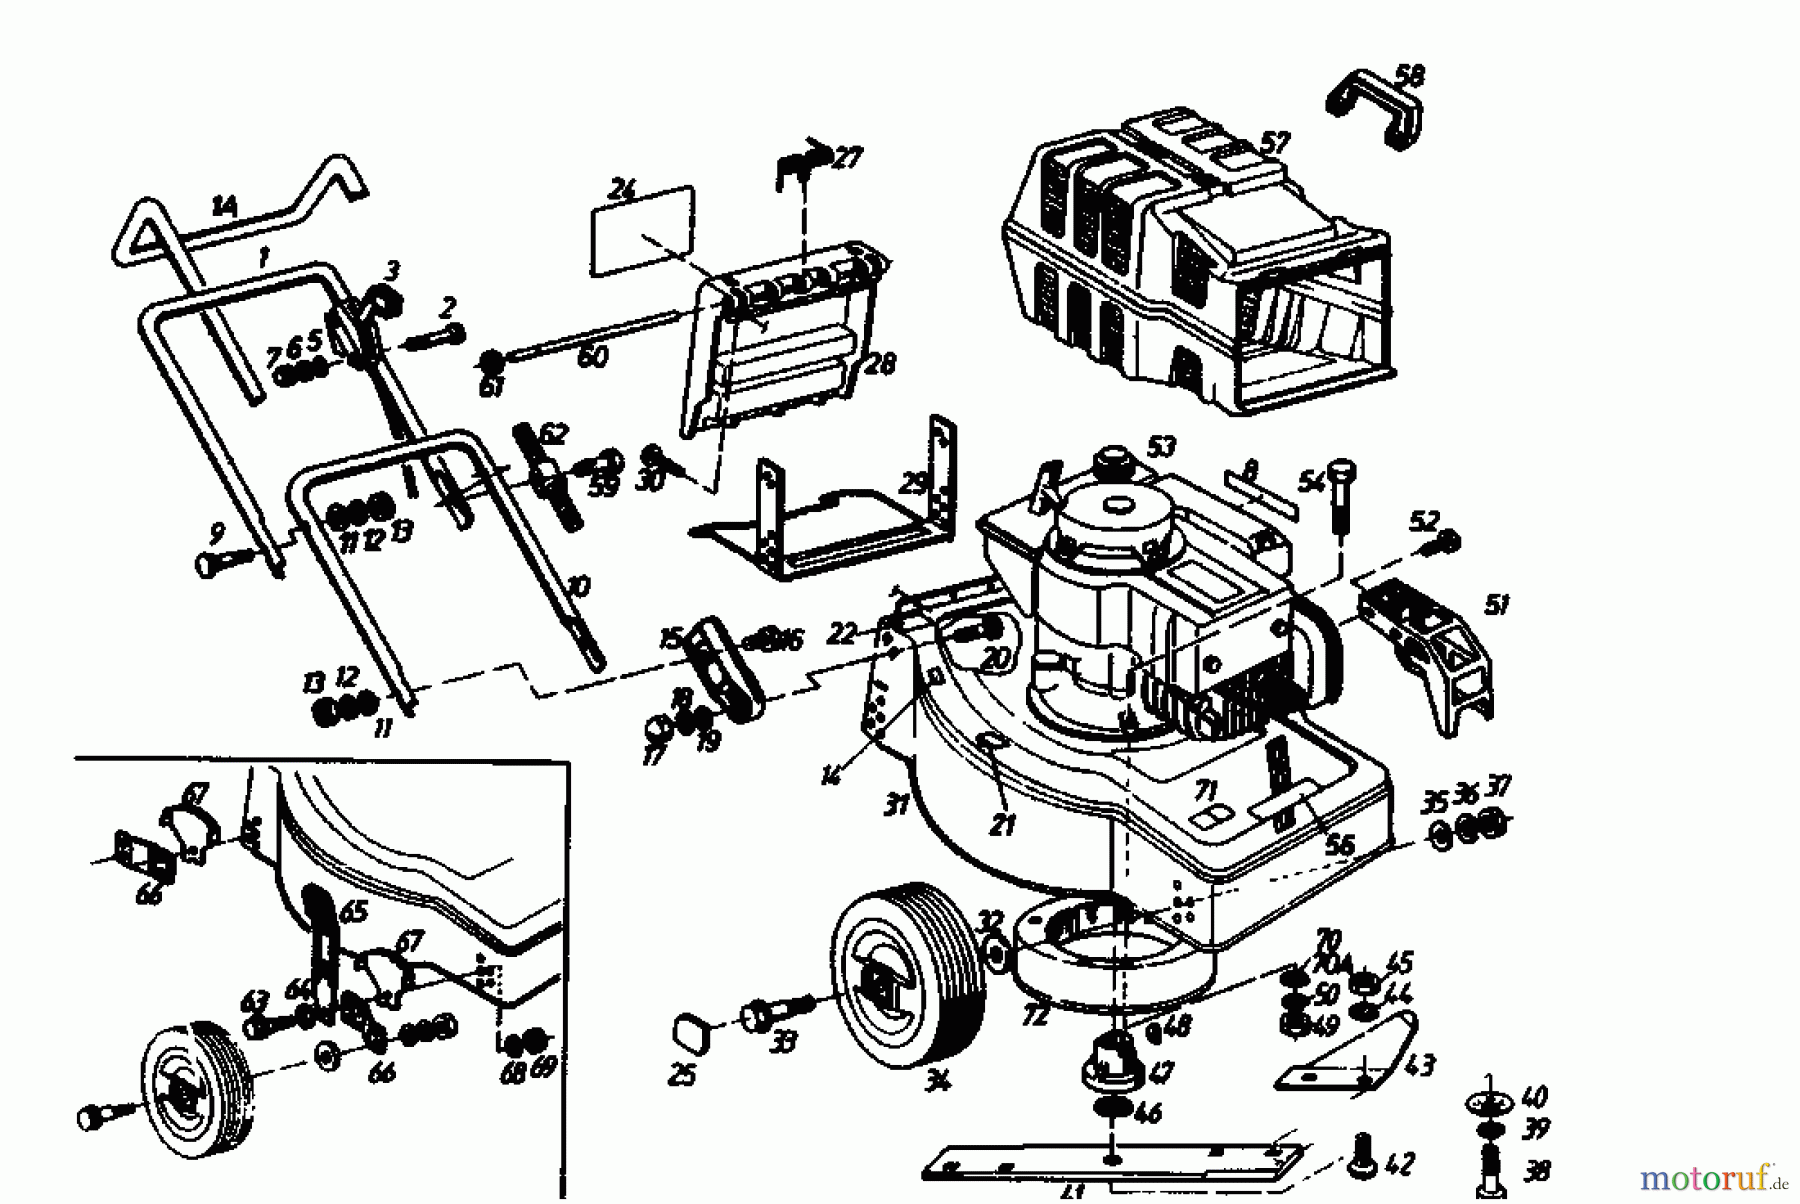  Golf Petrol mower Golf HBL 02880.04  (1989) Basic machine